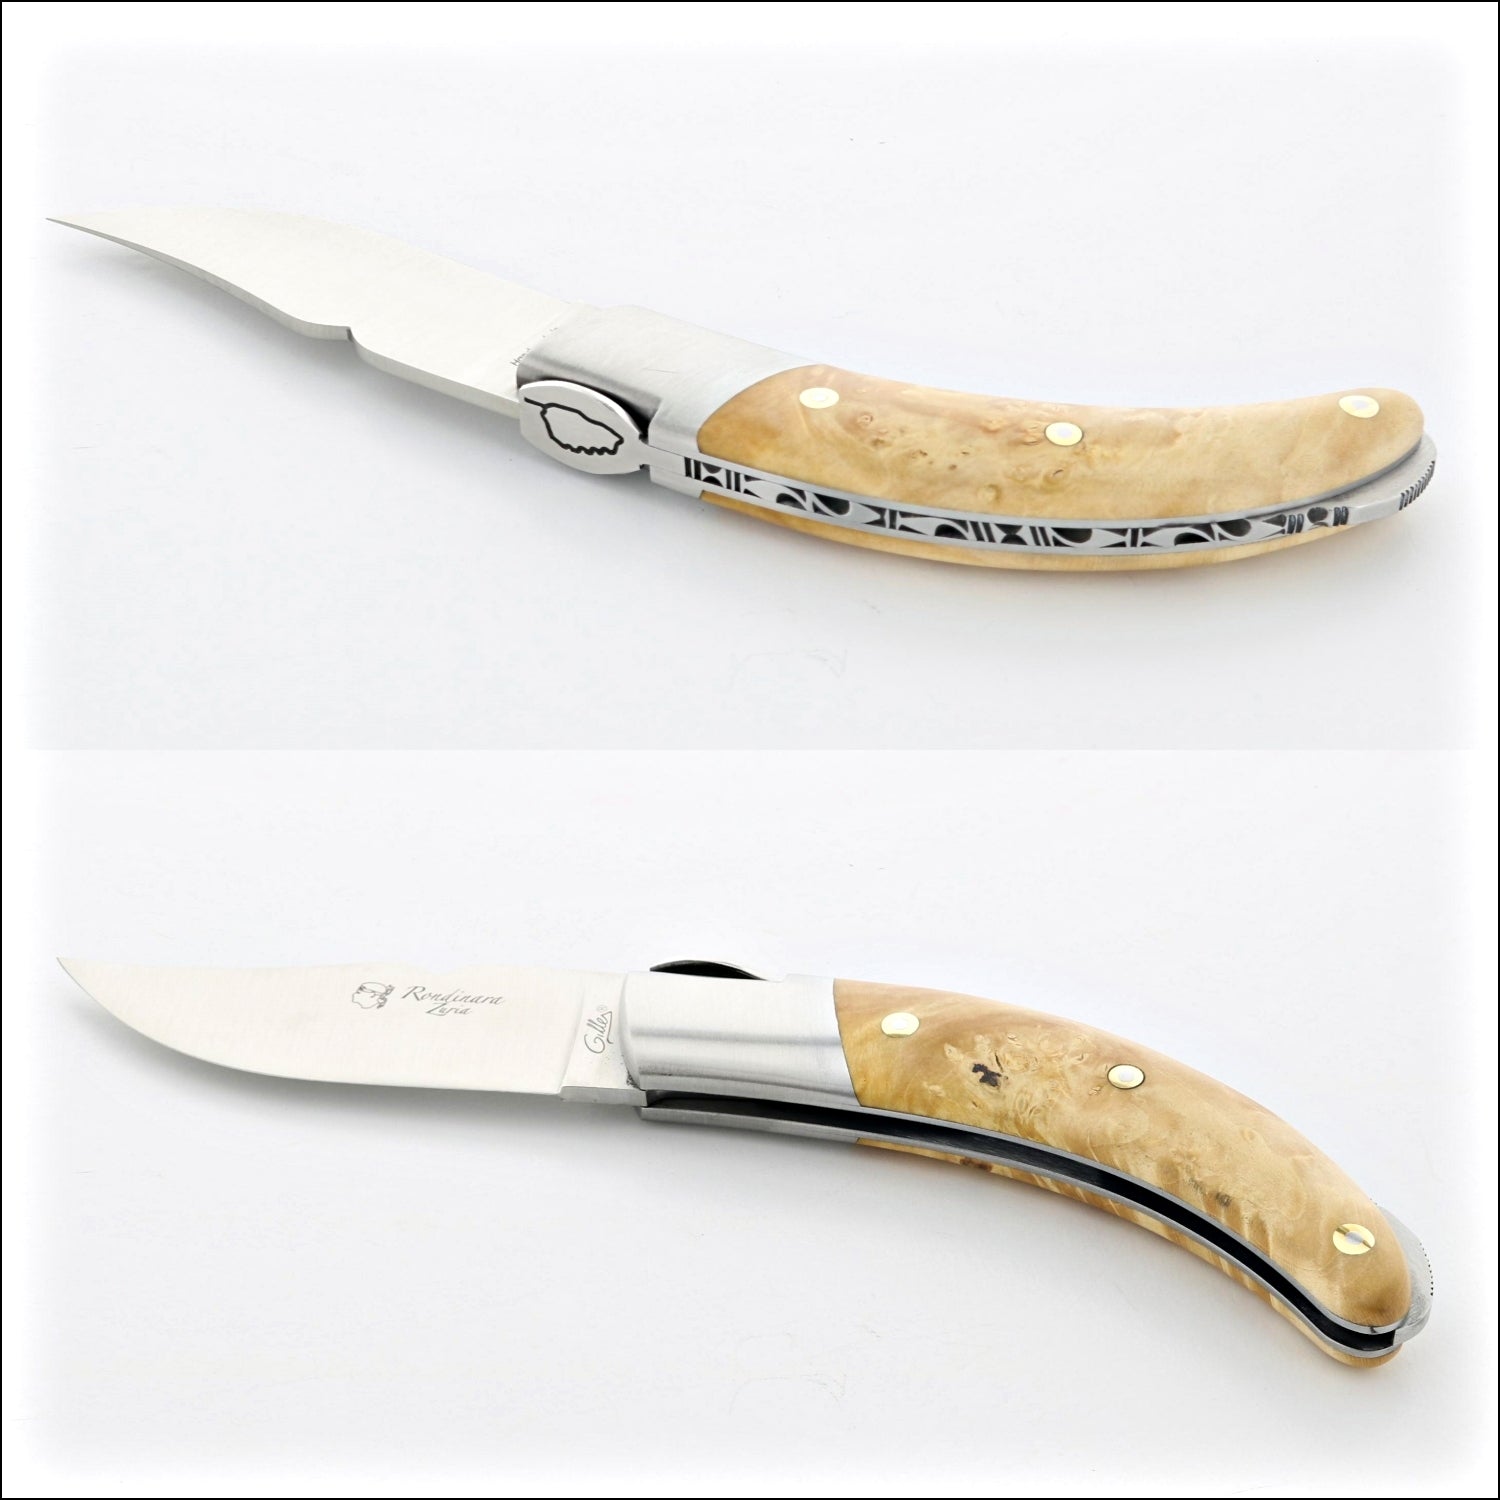 Corsican Rondinara Folding Knife - Burled Maple Handle